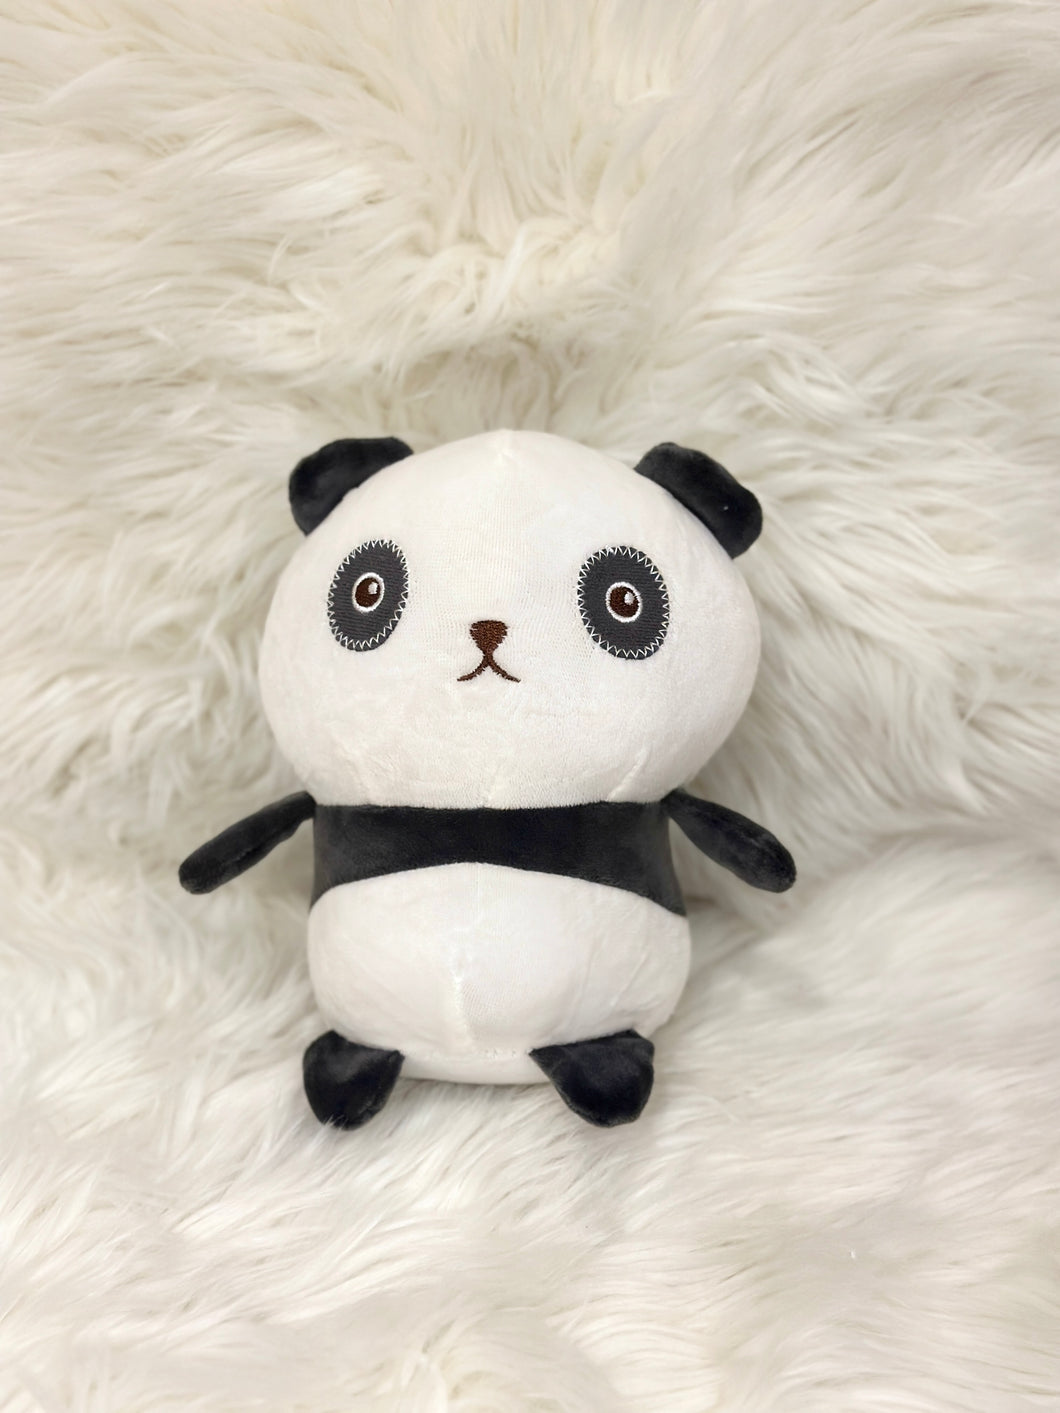 Cute Panda Soft Toy